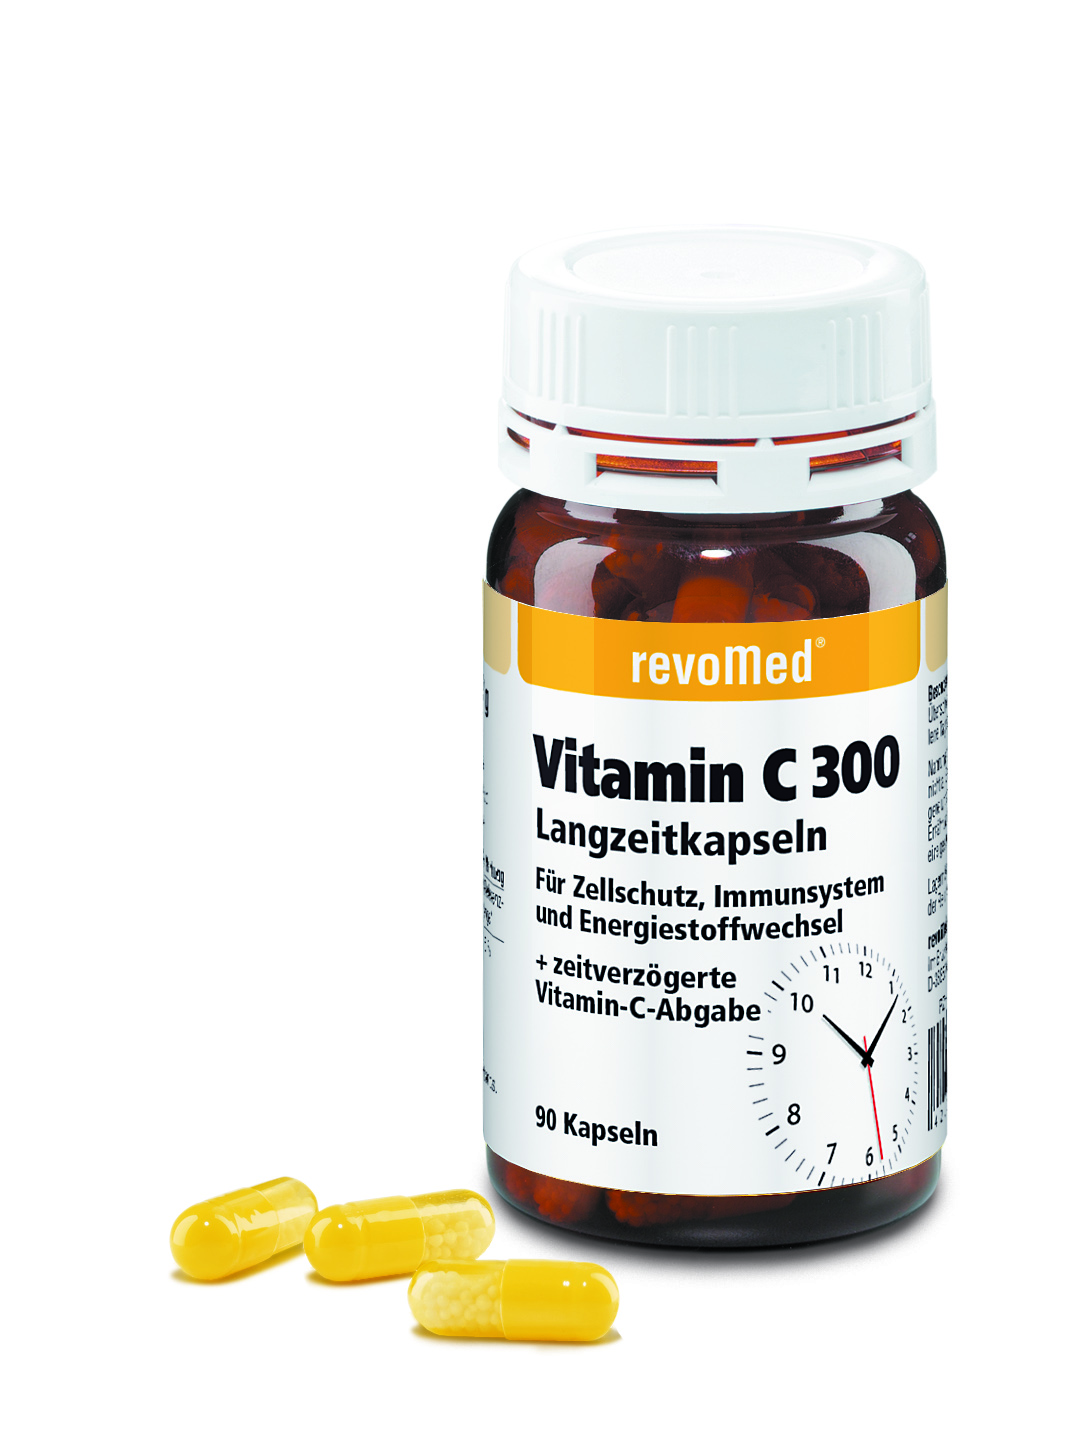 revomed - Vitamin C 300 Langzeitkapseln (90 Kps)